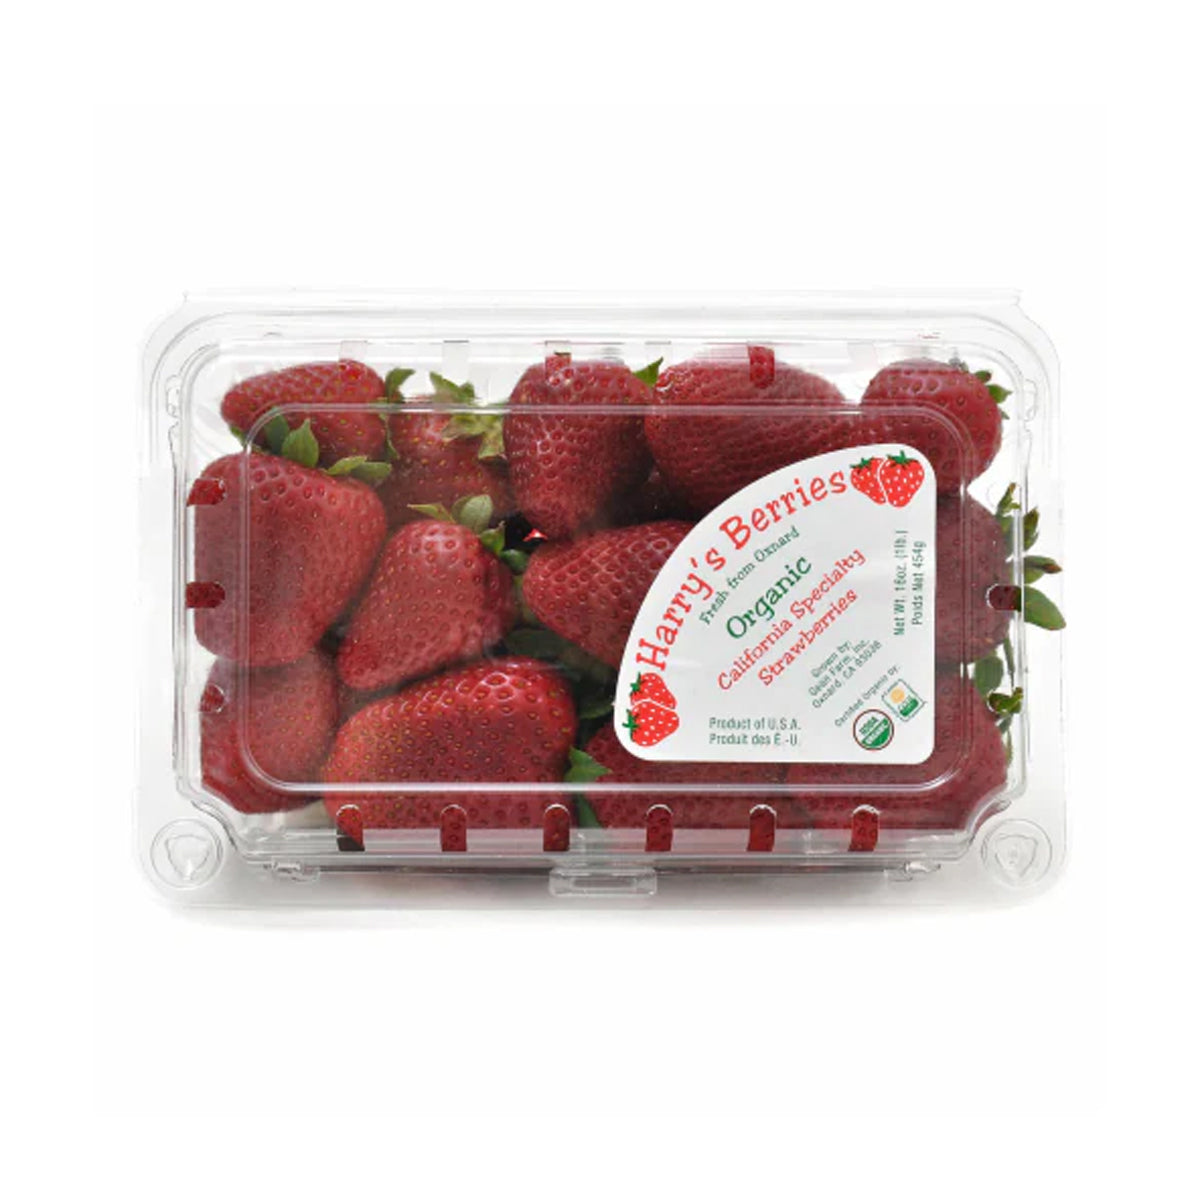 Harry'S Berries Organic Strawberries 1 LB